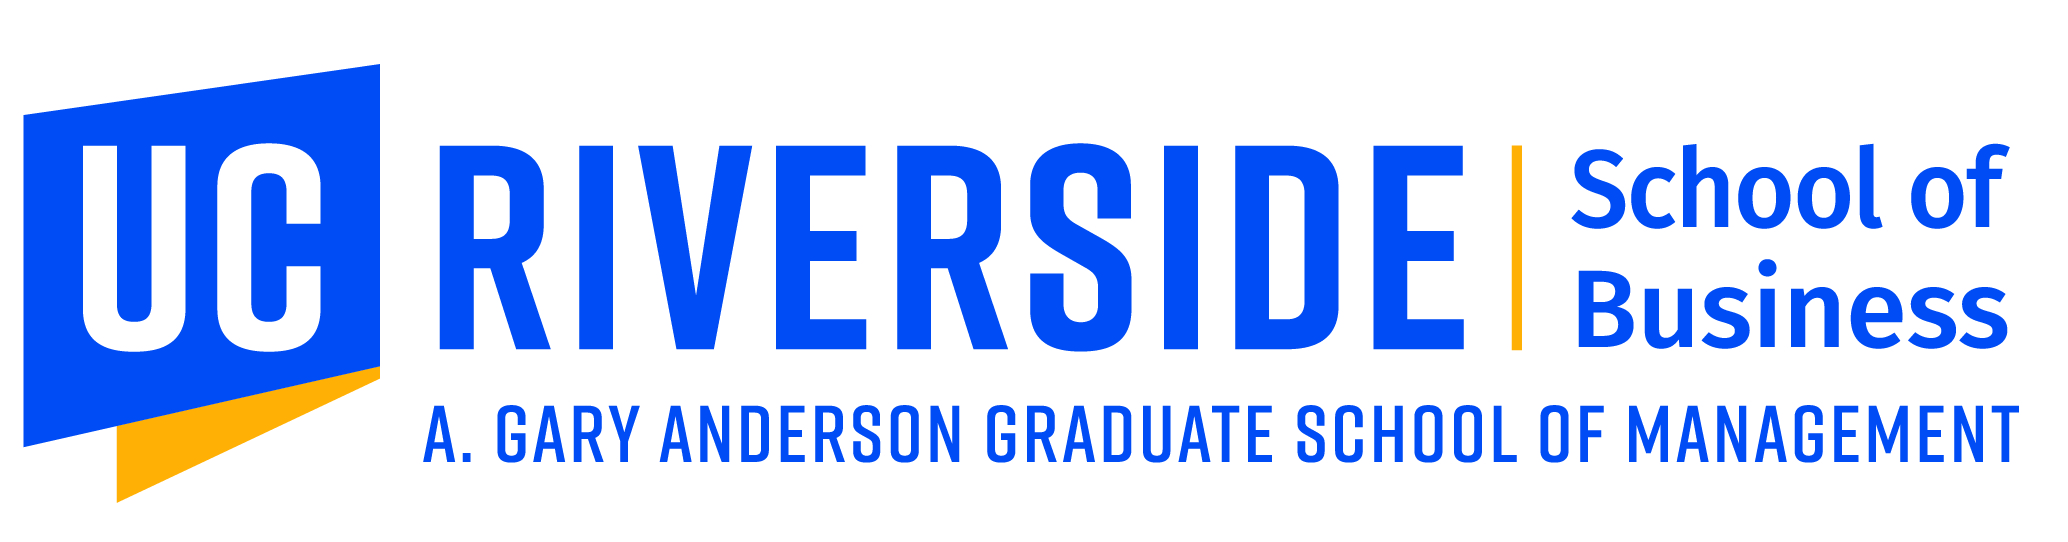 UCR Anderson Graduate School of Management